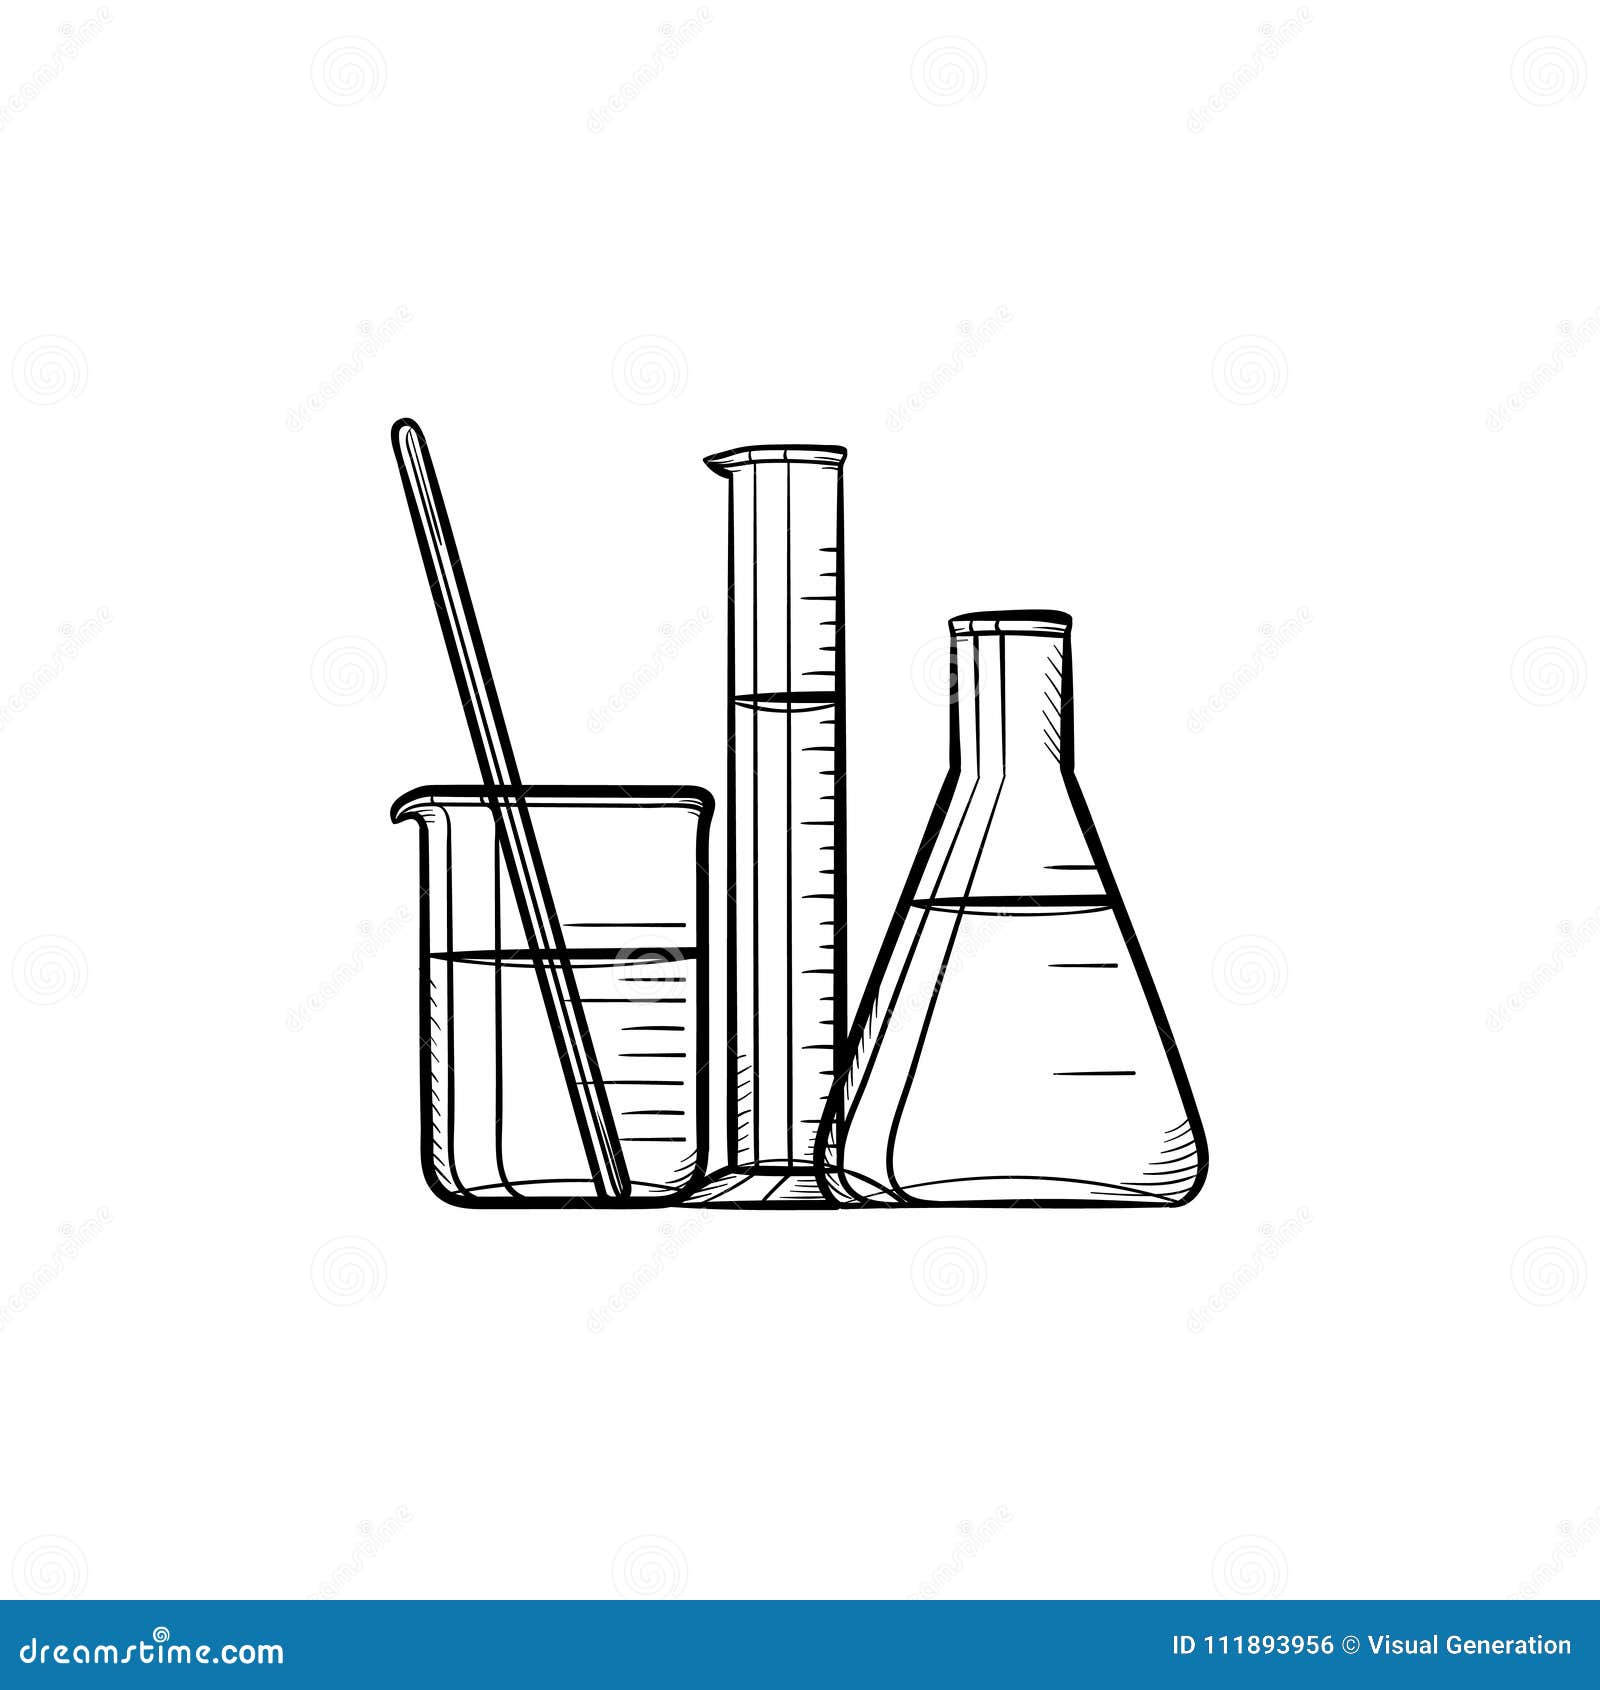 File:Beakers.svg - Wikimedia Commons | Chemistry lab equipment, Beakers,  Beaker